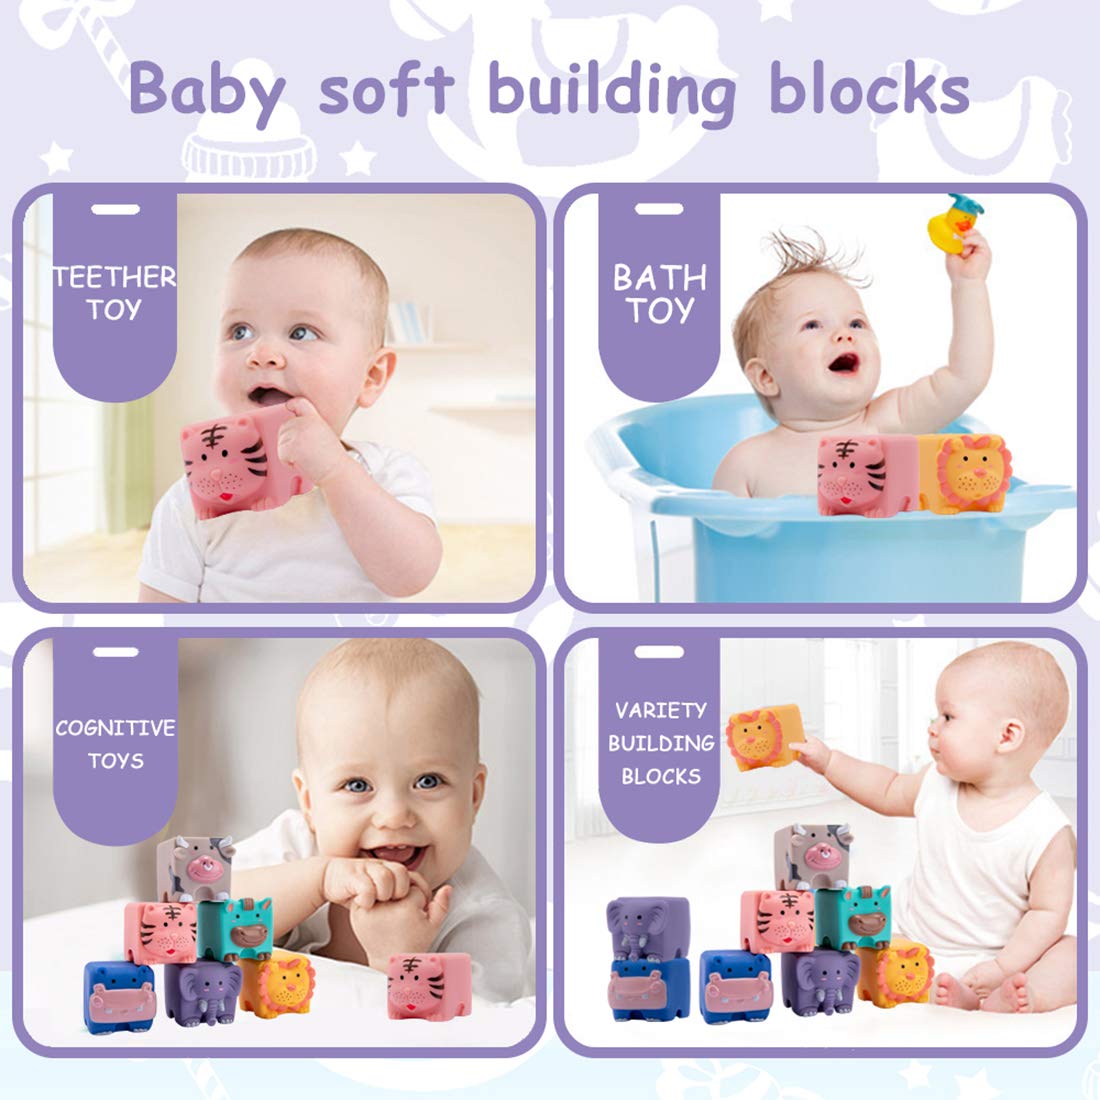 JETM·HH Baby Blocks - Soft Building Blocks Toys for 6 Months Up Toddlers-Soft Blocks for Toddlers - Silicone Bath Toys - Teething Chewable Squeeze 6 PCS Adorable Animals Shapes Set